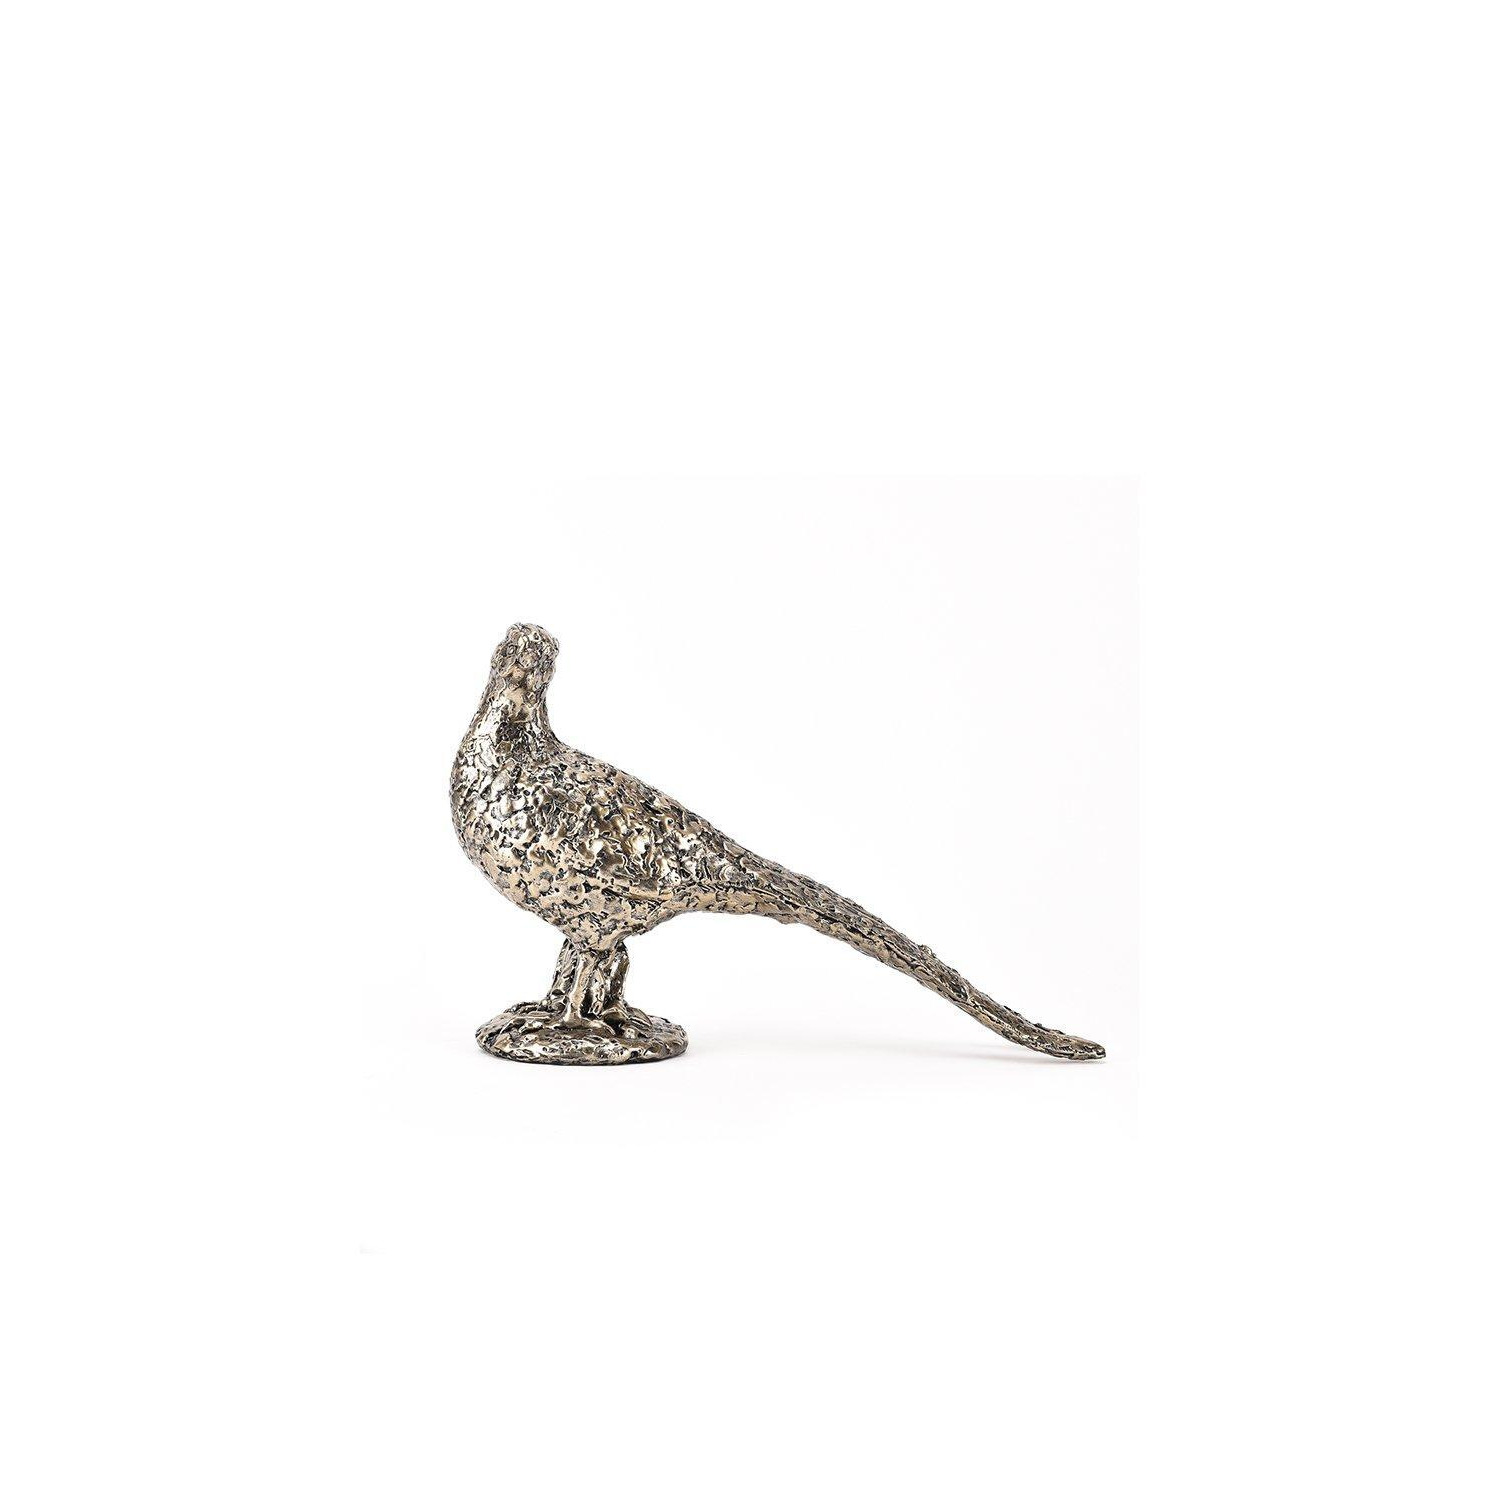 Bronze Finish Resin Pheasant Figurine - image 1